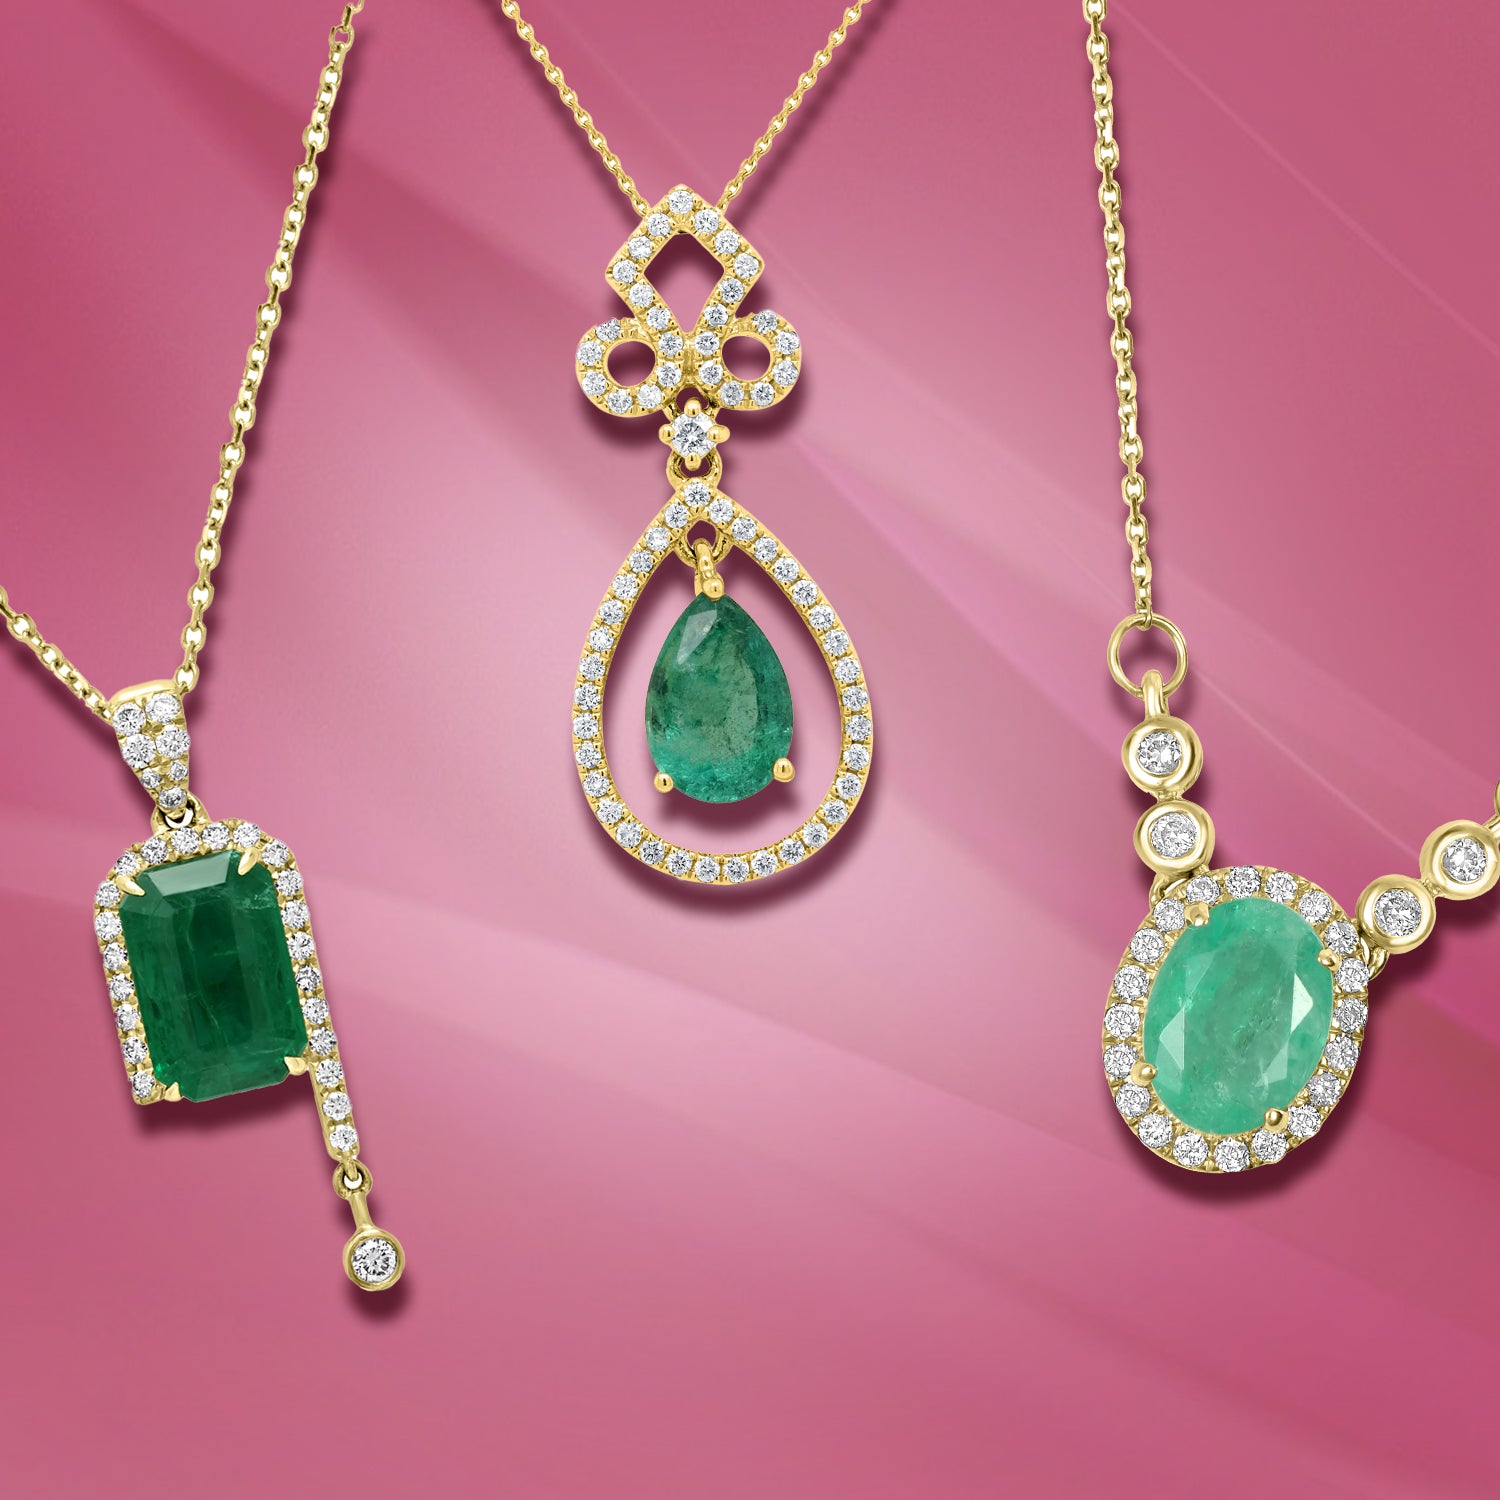 emerald pendant necklace